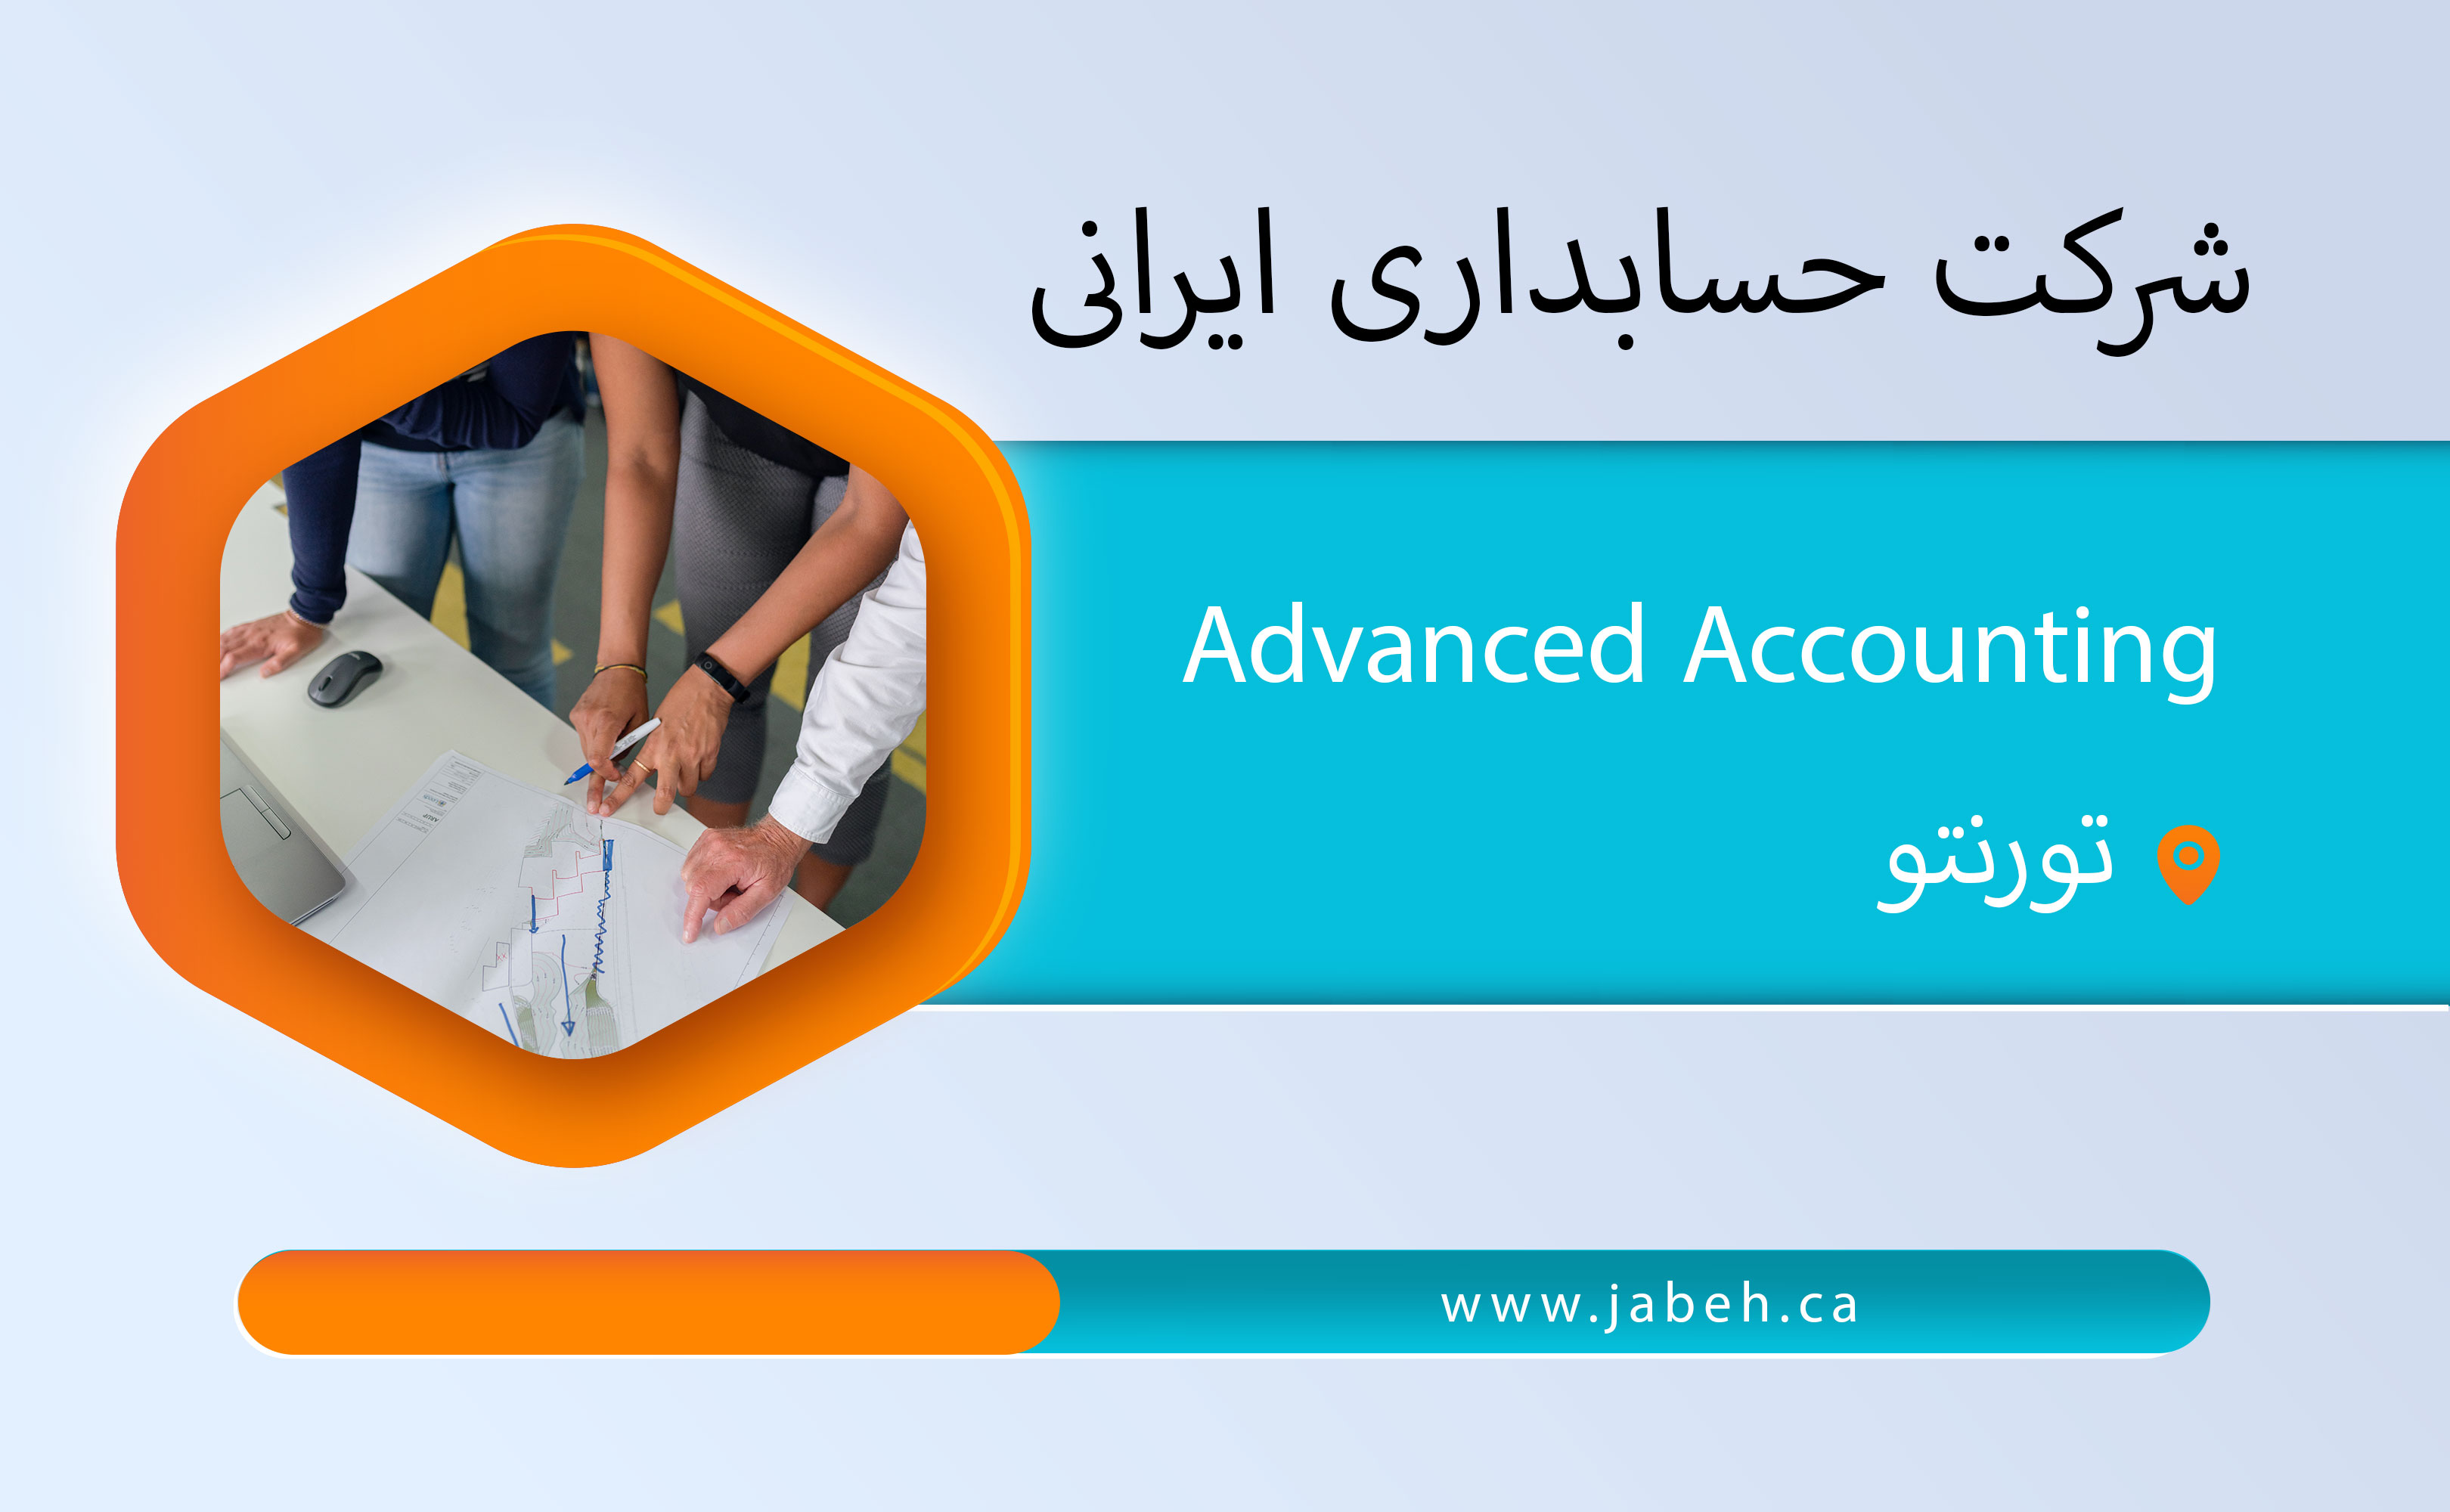 Iranian advanced accounting company in Toronto